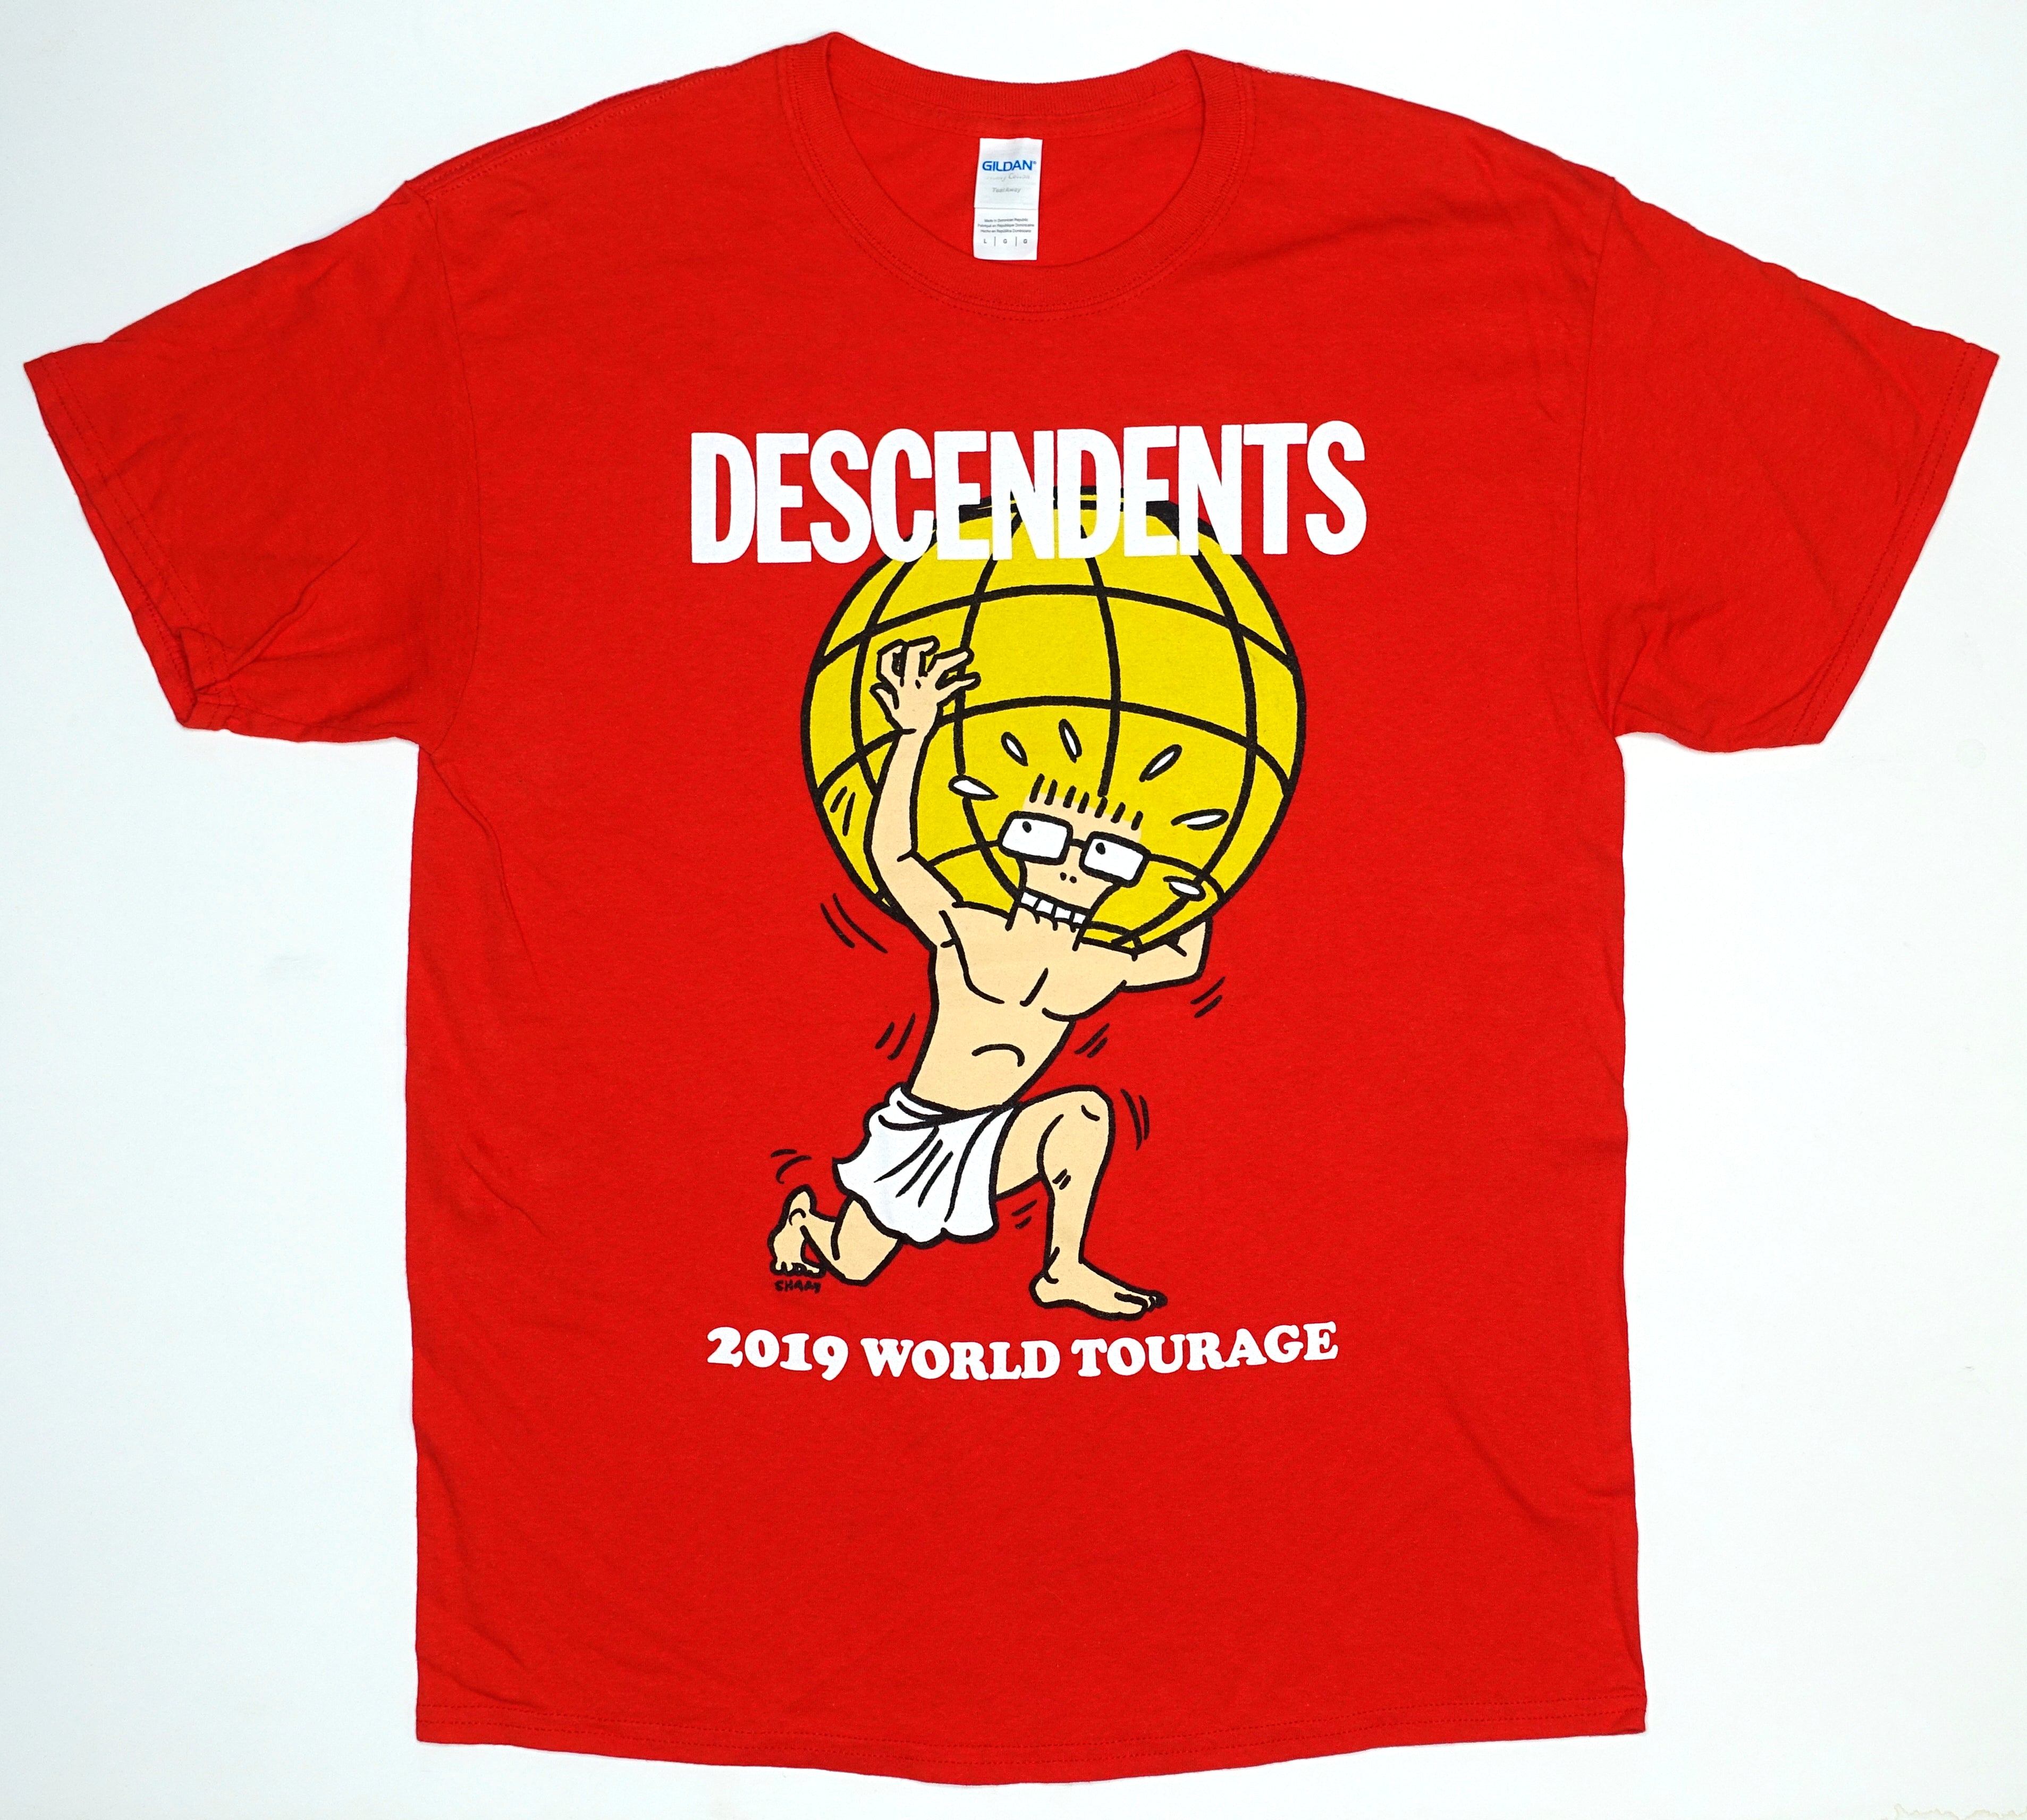 Descendents - 2019 World Tourage Tour Shirt Size Large